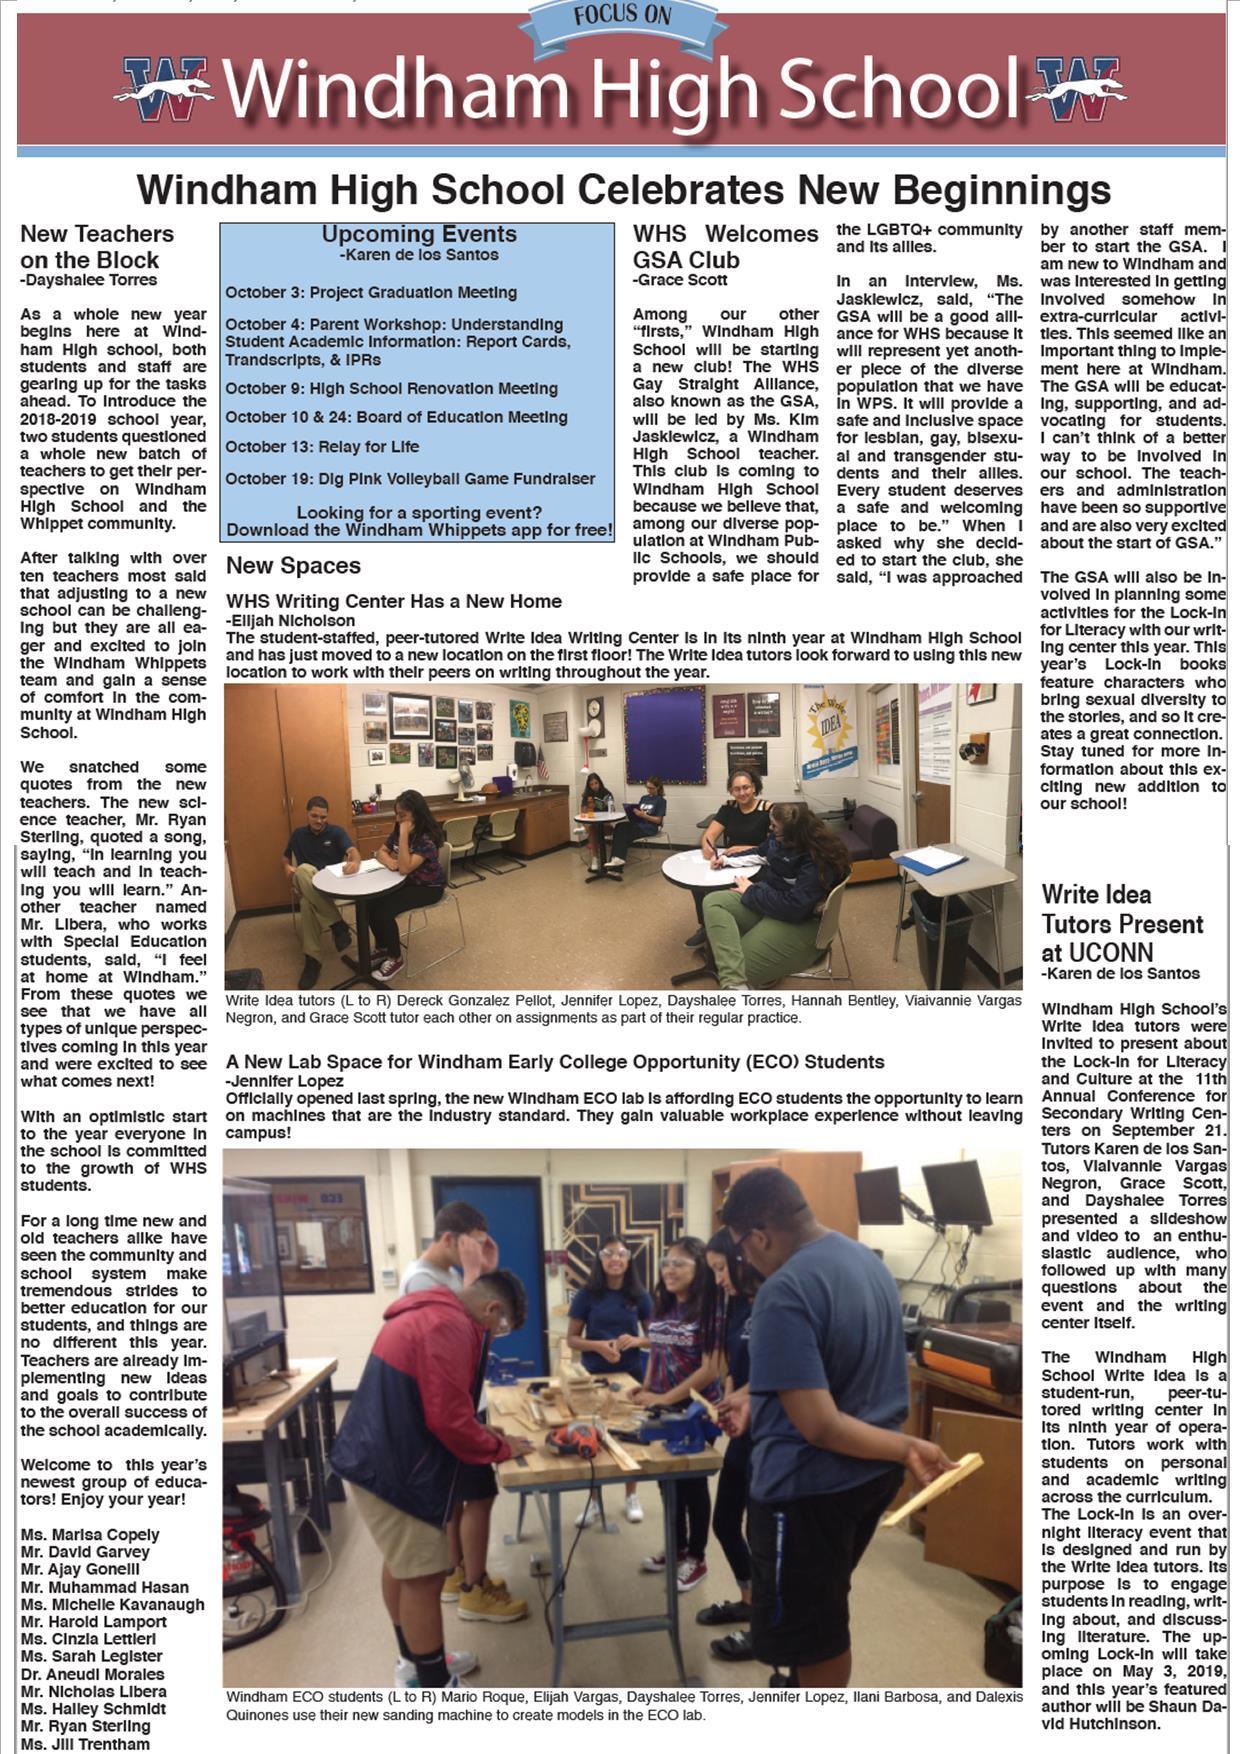 "Focus on Windham High School" article